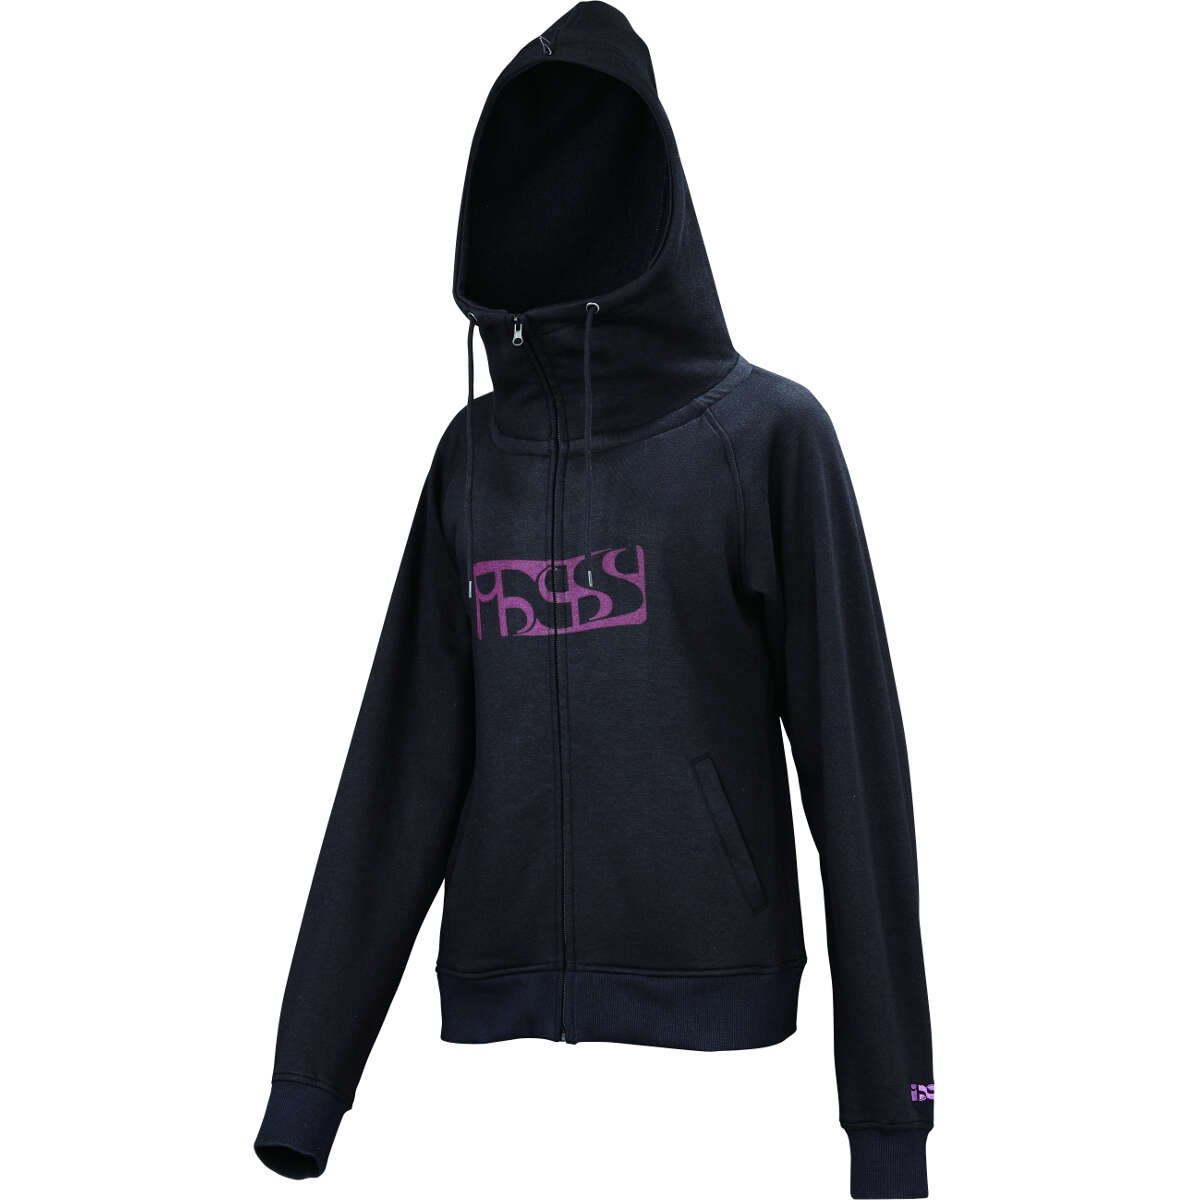 IXS Girls Zip Hoodie Brand Black/Purple